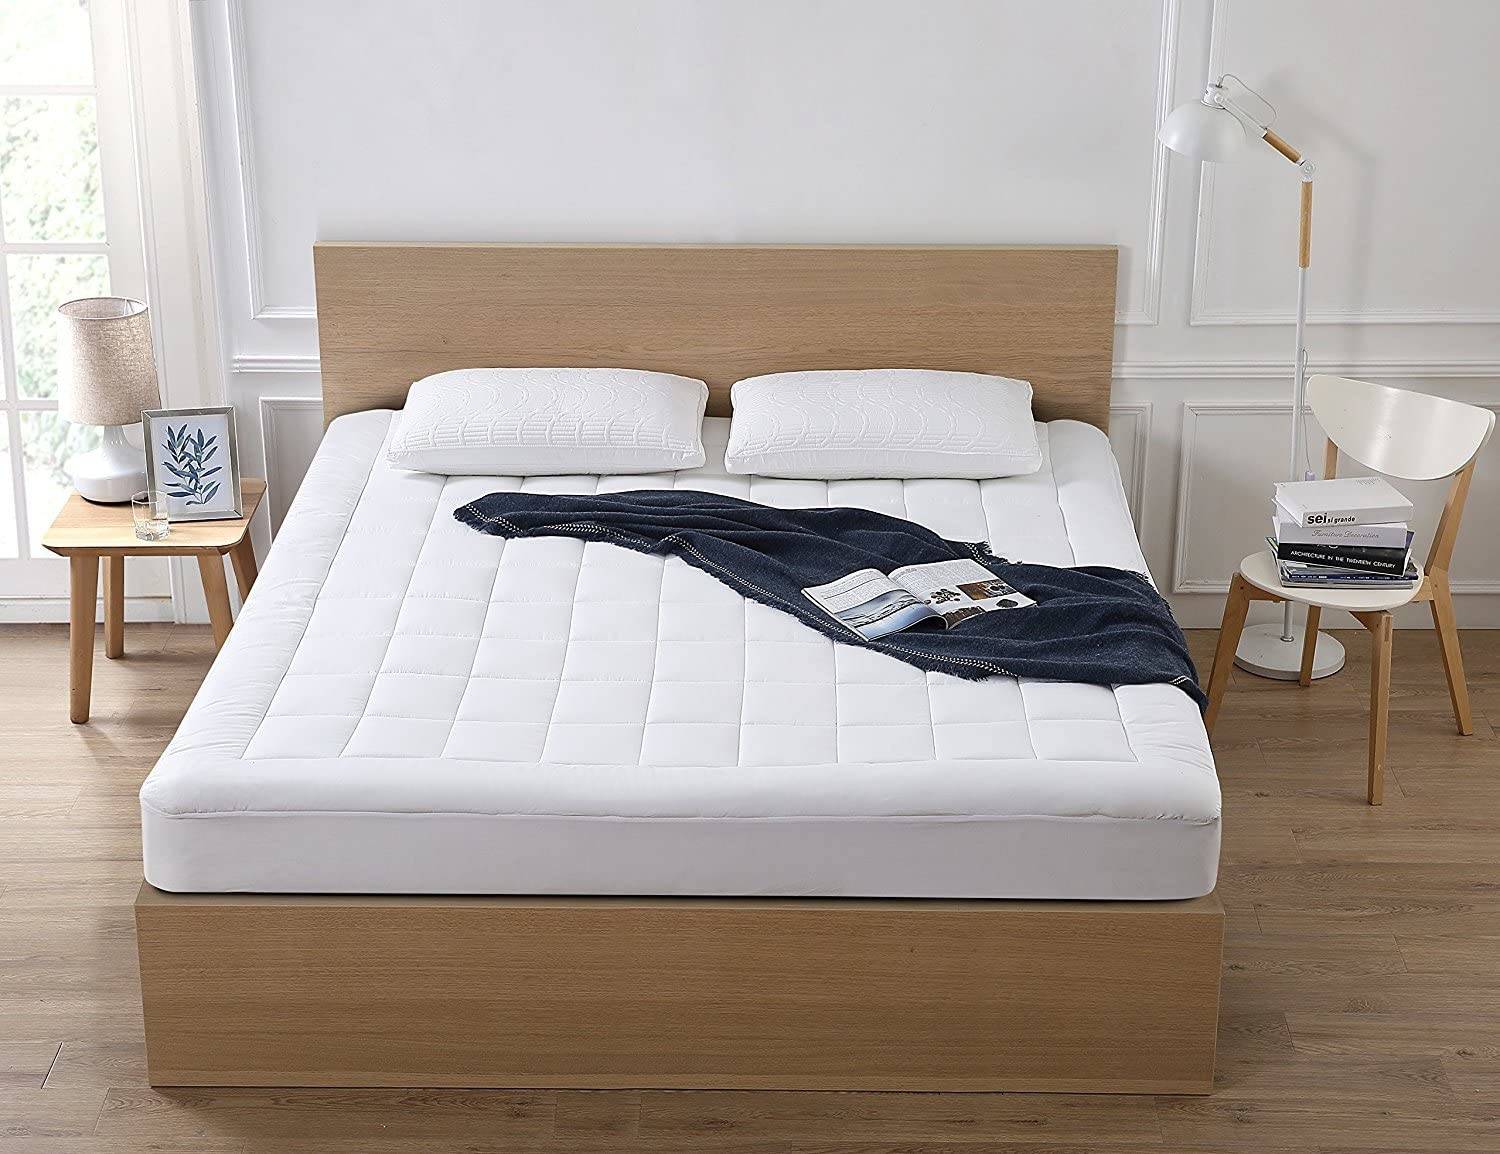 sleep judge air mattress